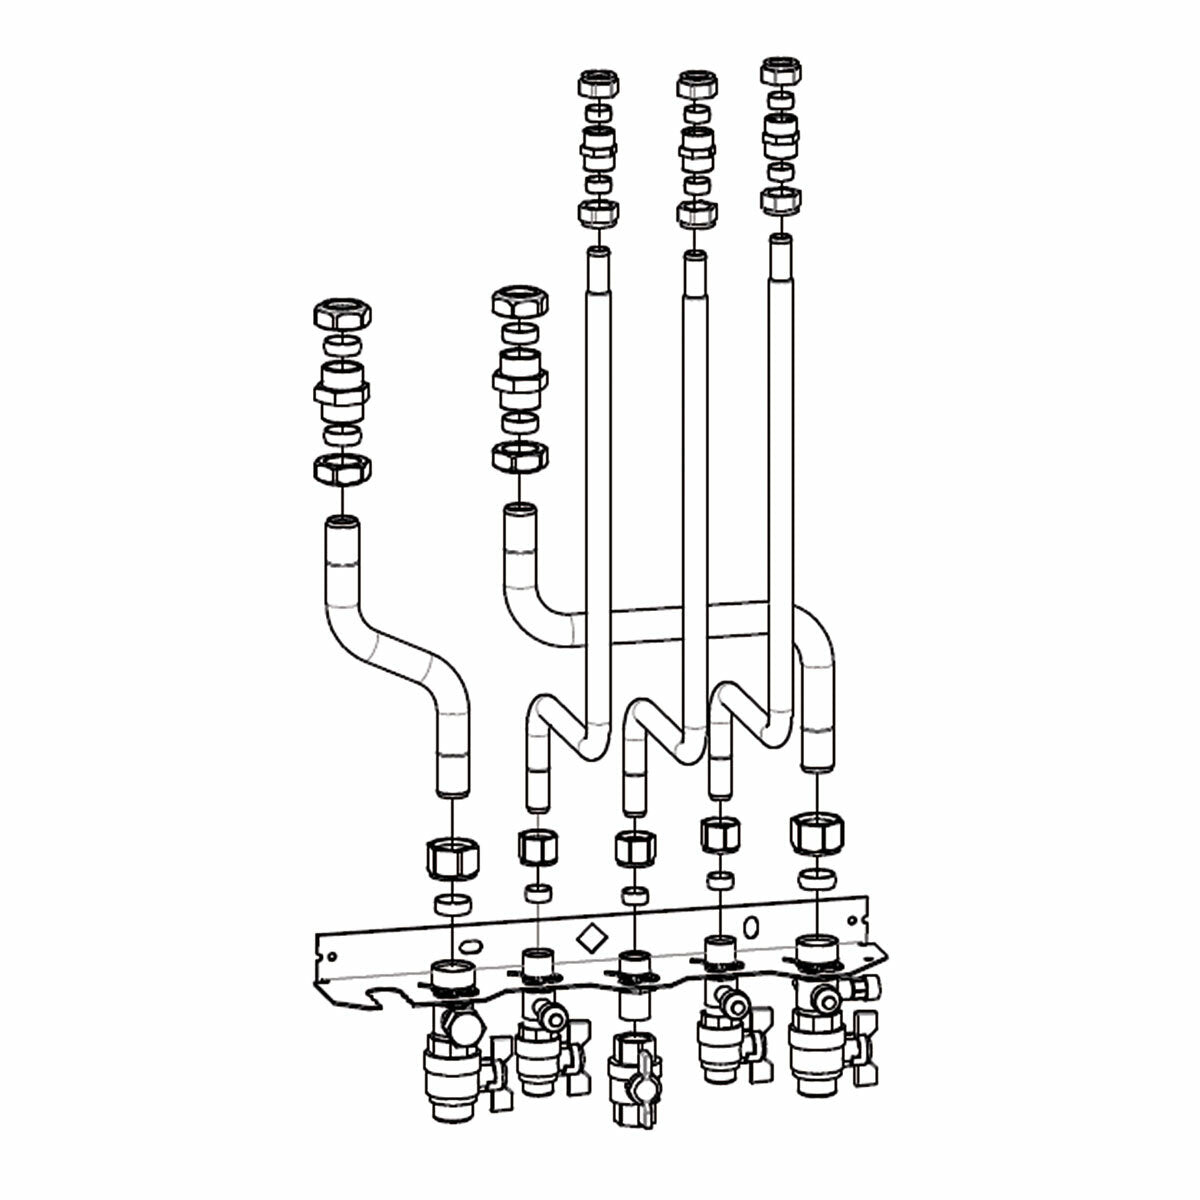 Hydraulic connection kit for Daikin hybrid system